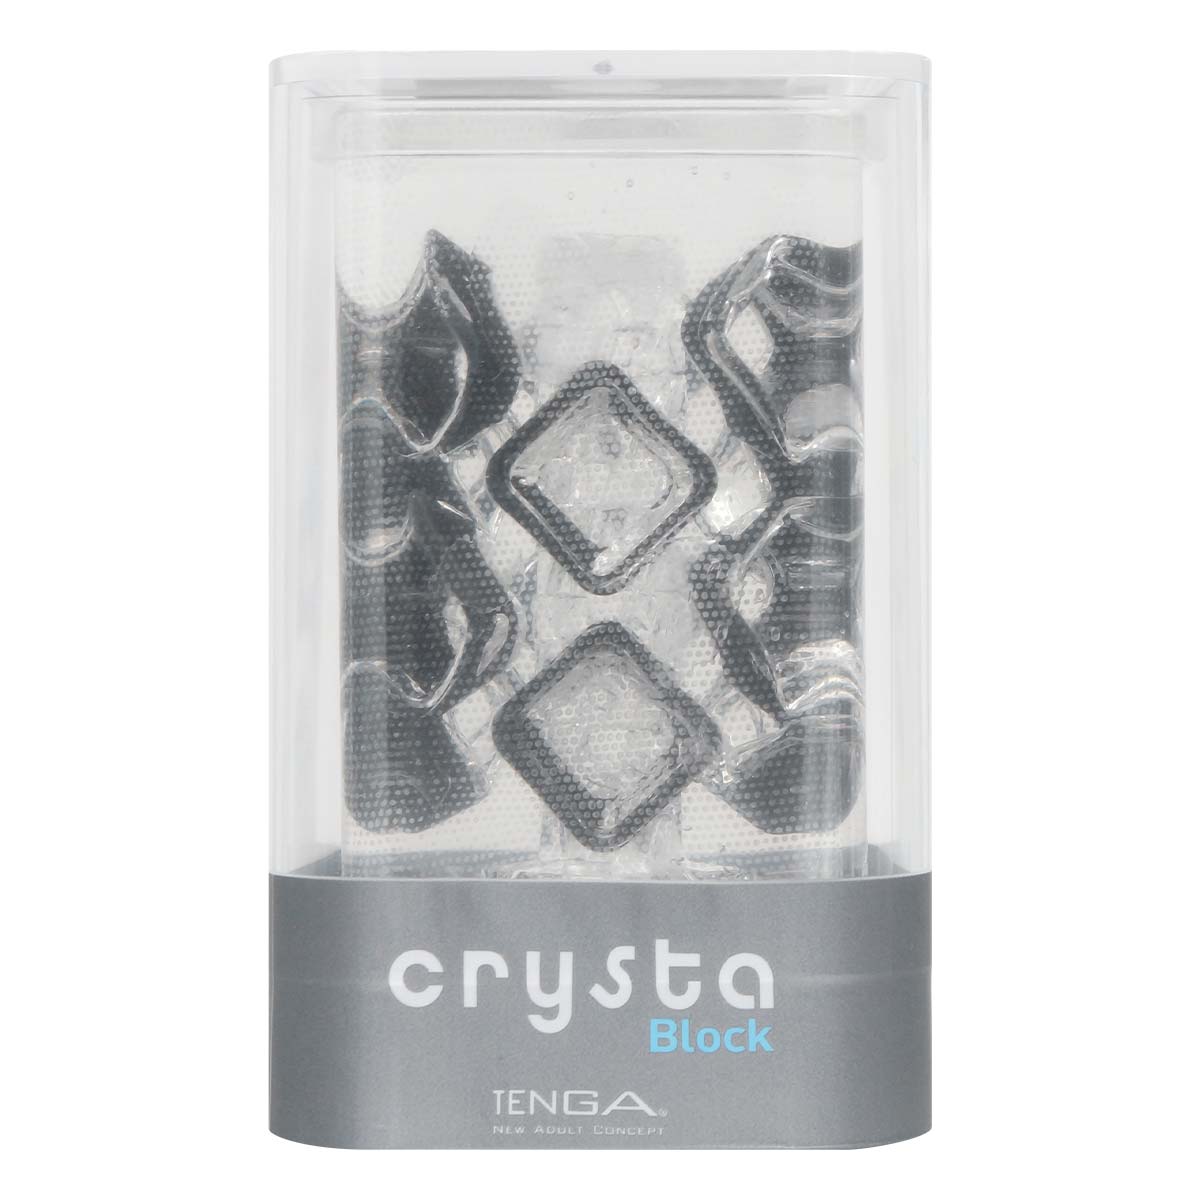 TENGA crysta Block (Defective Packaging)-thumb_2